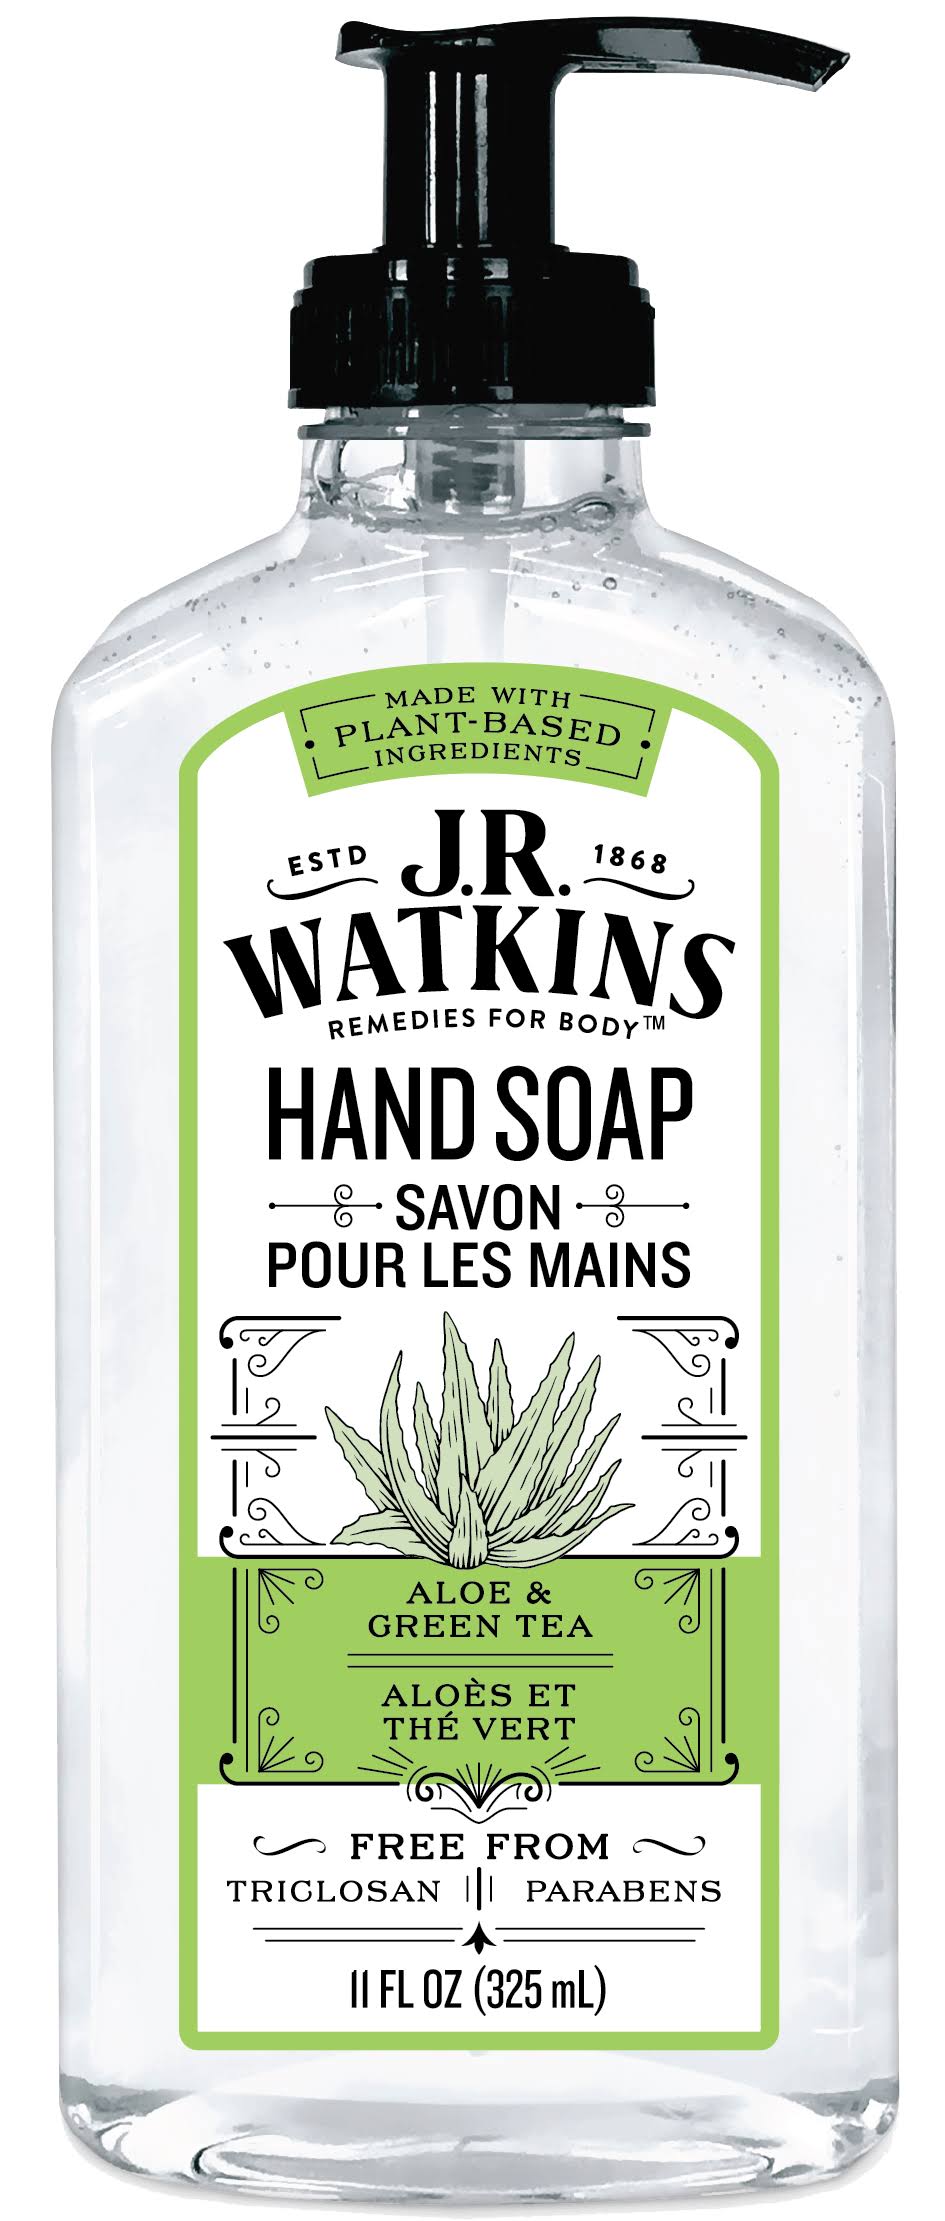 J.R. Watkins Aloe and Green Tea Liquid Hand Soap - 11oz